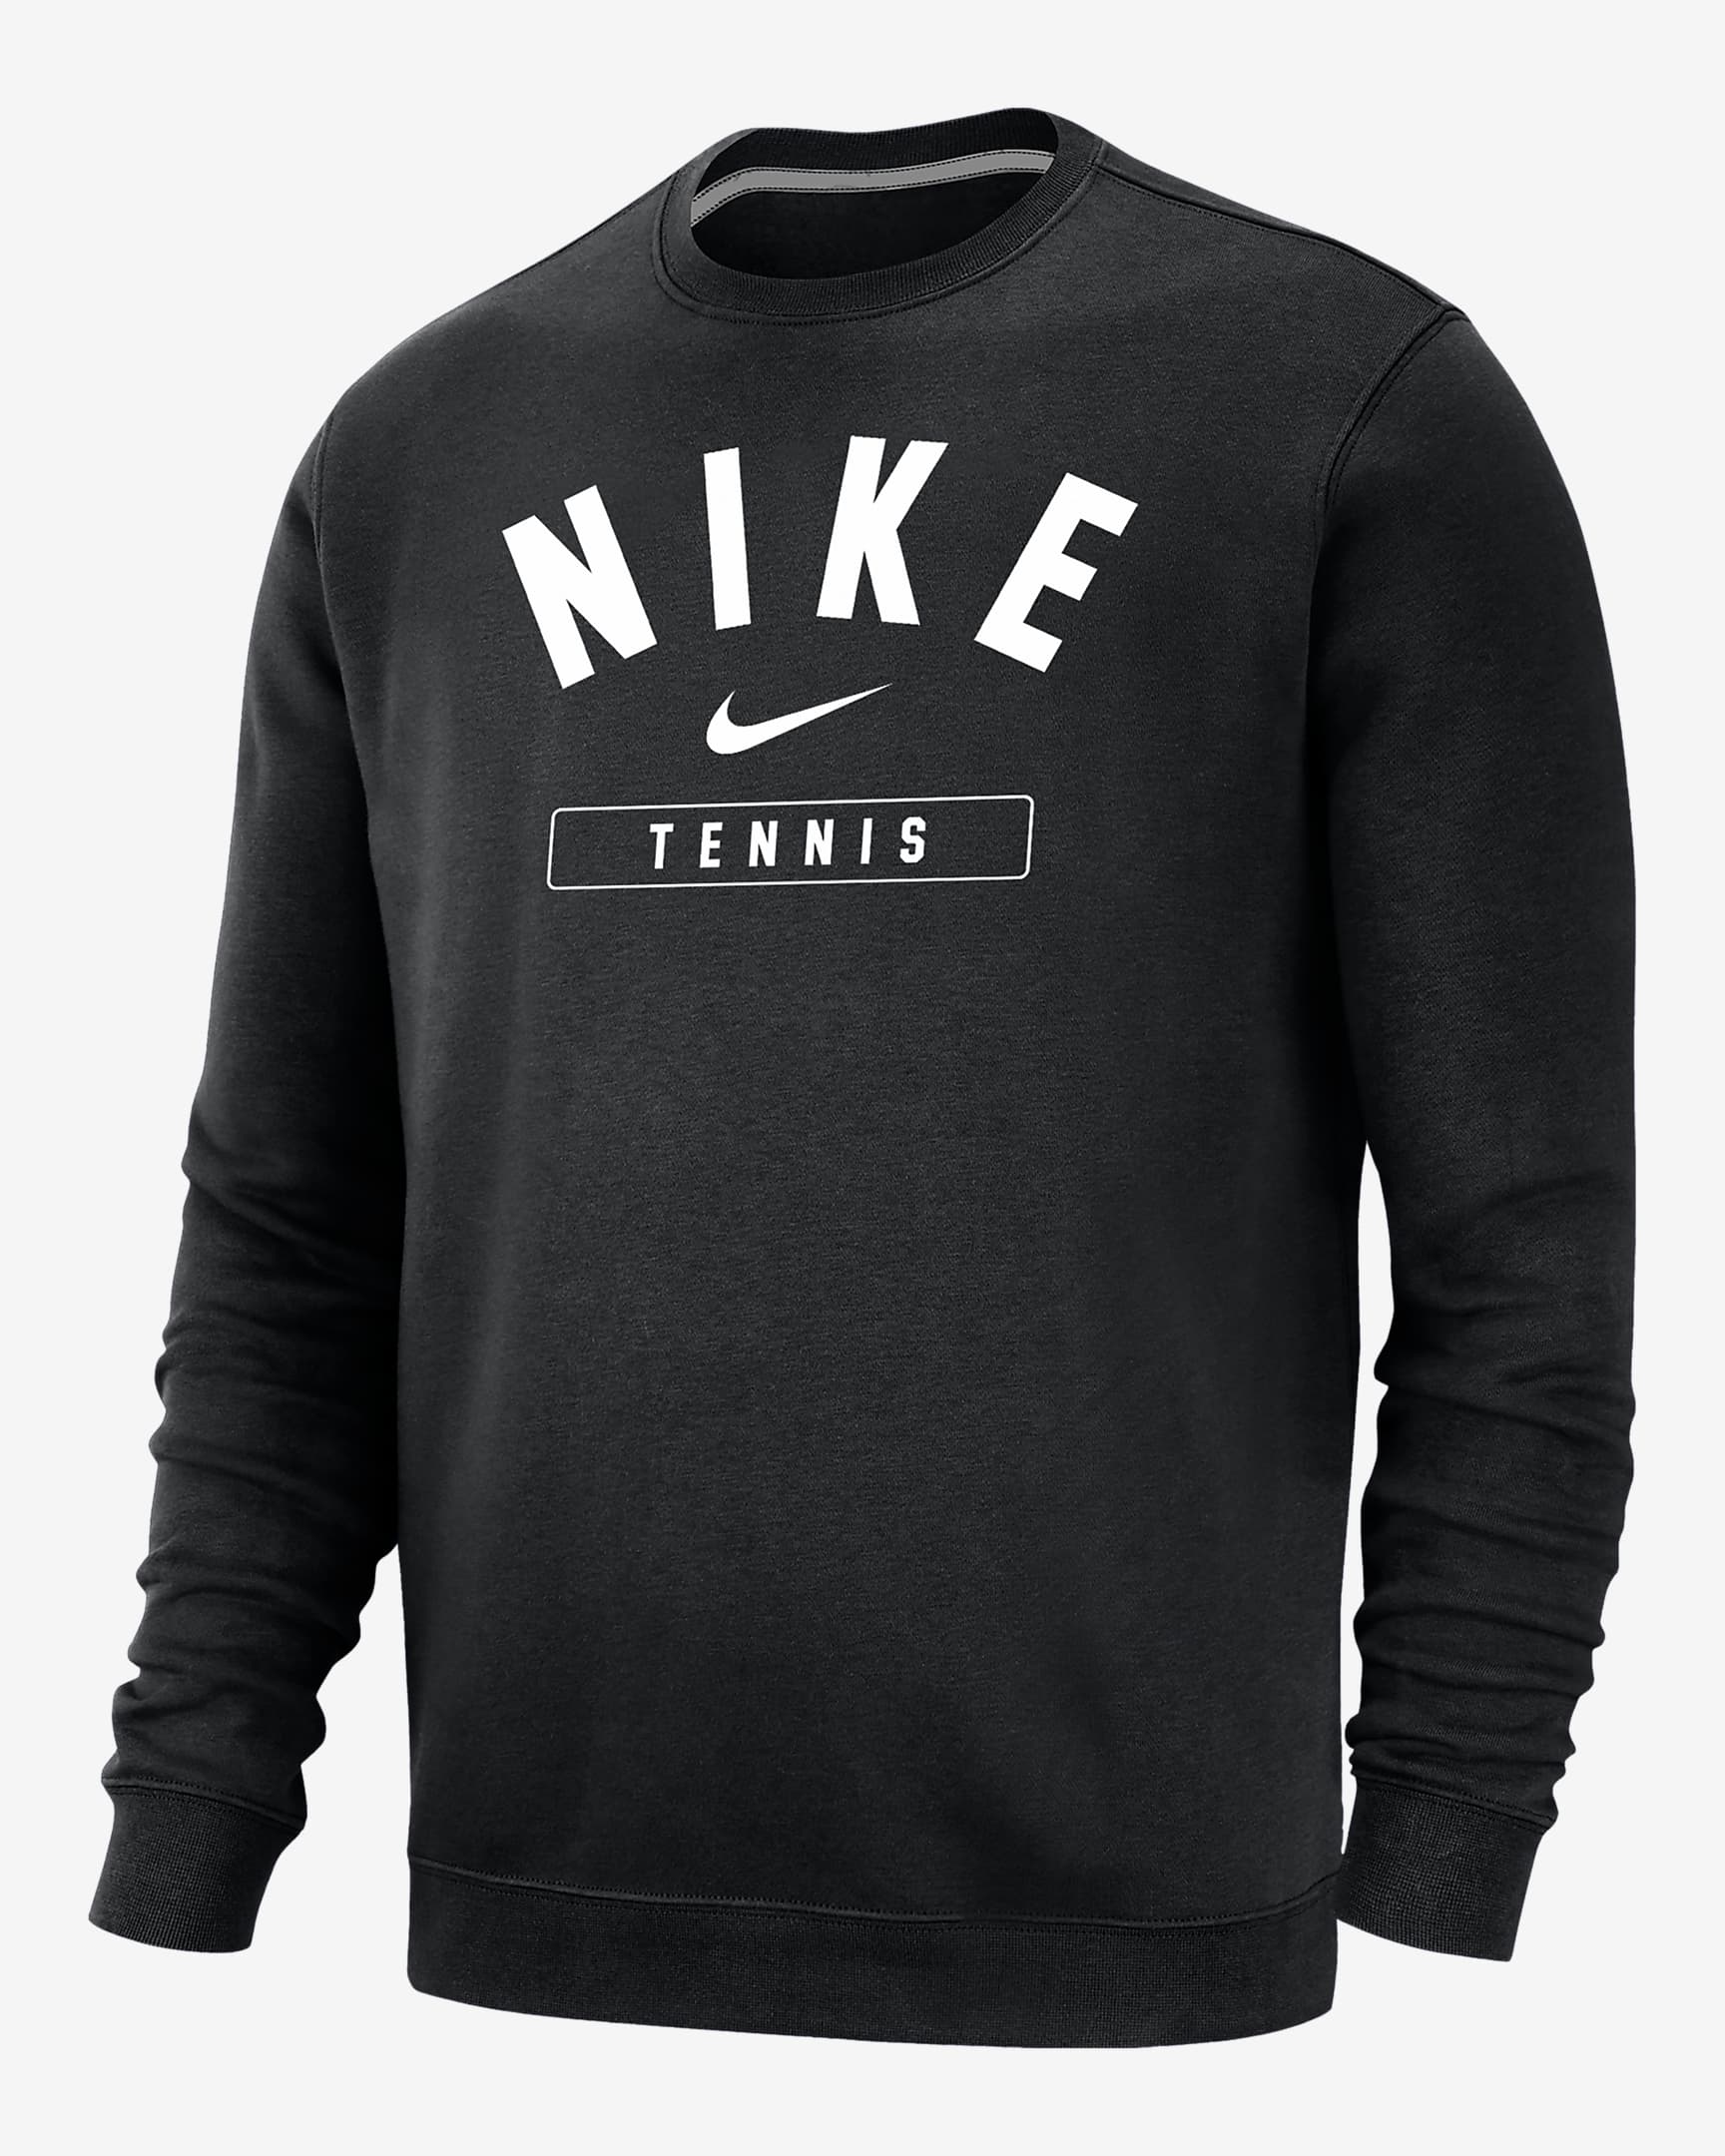 Nike Tennis Men's Crew-Neck Sweatshirt. Nike.com